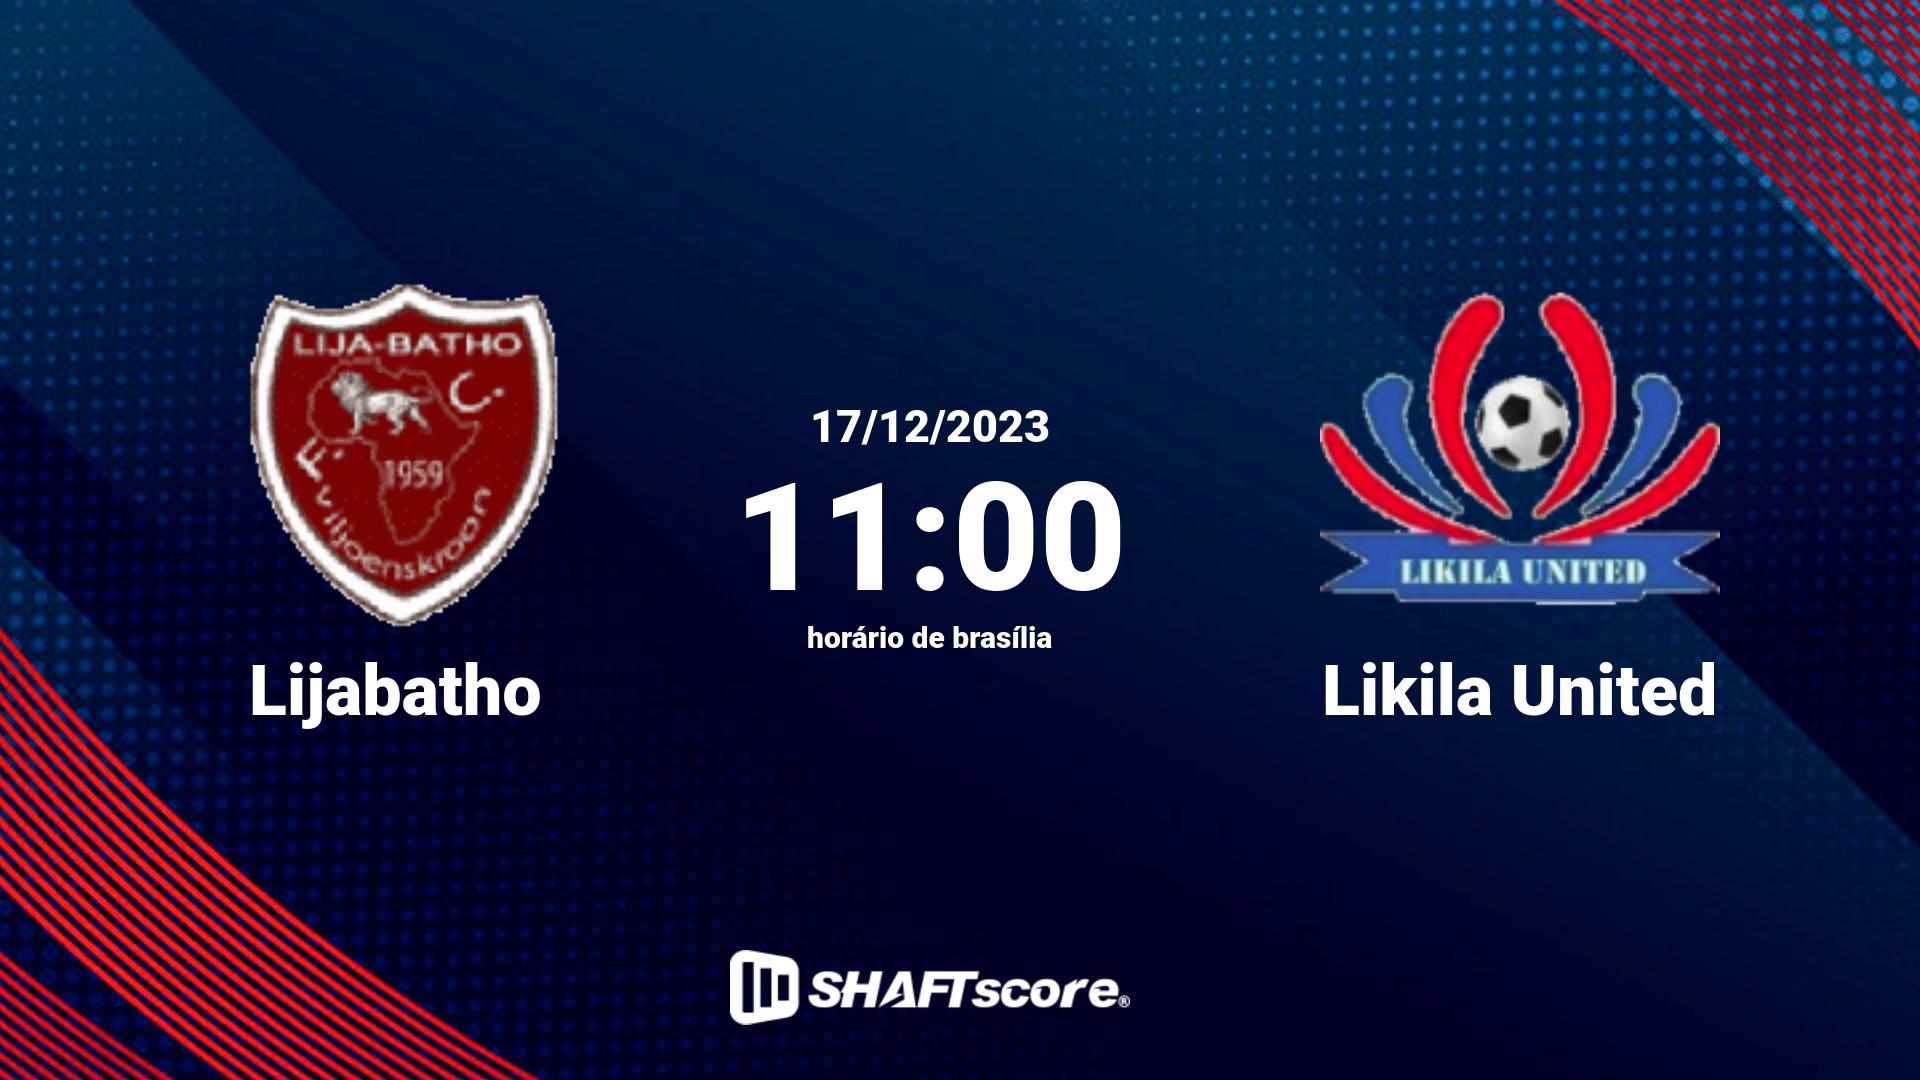 Estatísticas do jogo Lijabatho vs Likila United 17.12 11:00